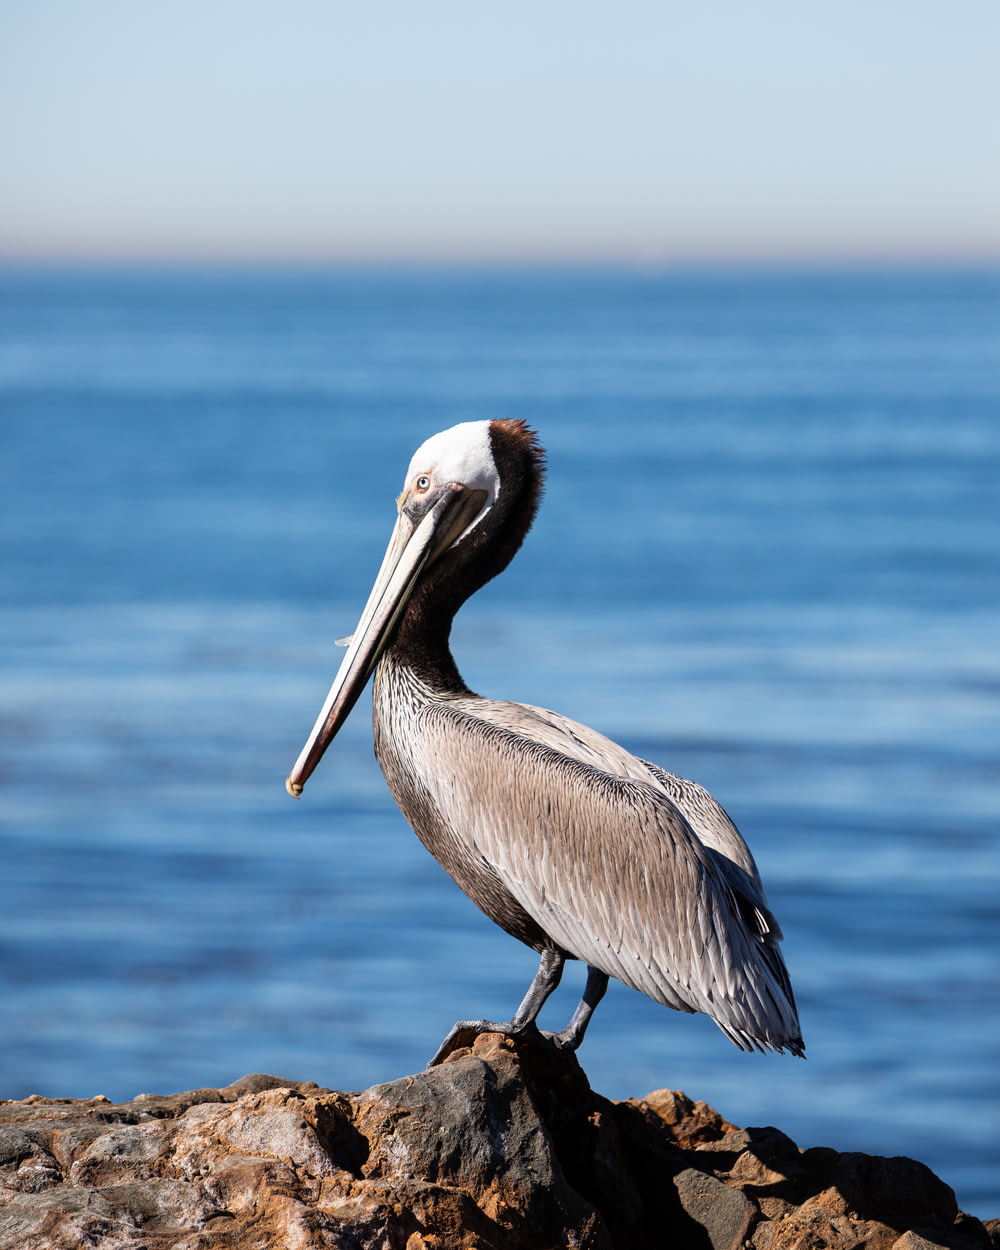 a pelican sitting on a rock near the ocean